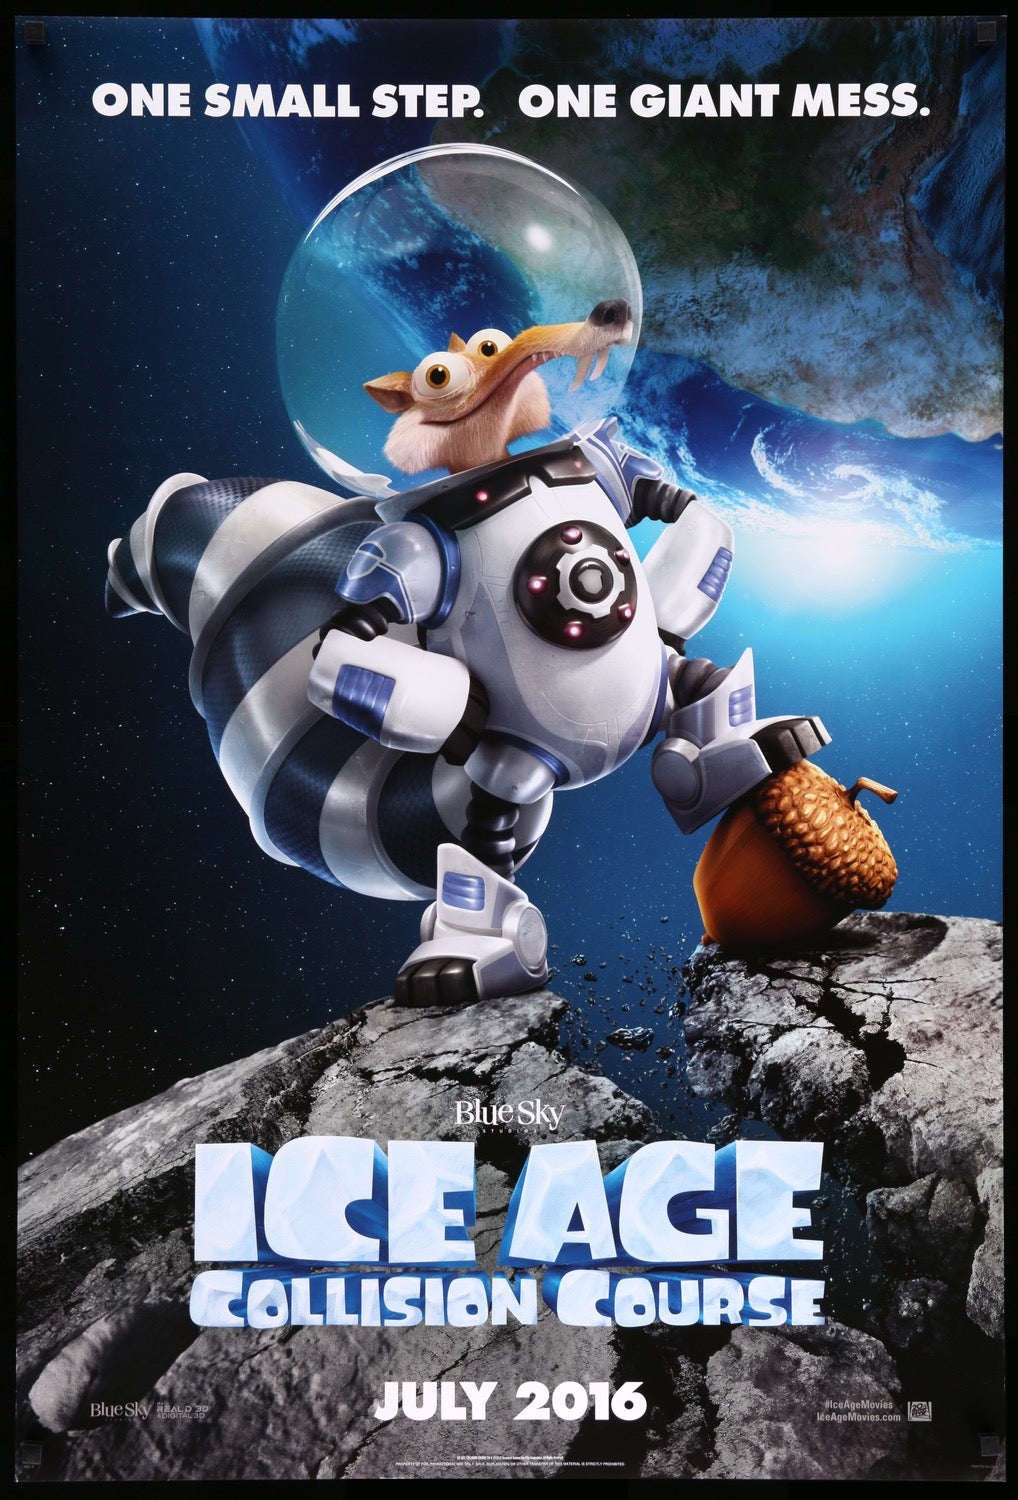 Ice Age: Collision Course (2016) original movie poster for sale at Original Film Art